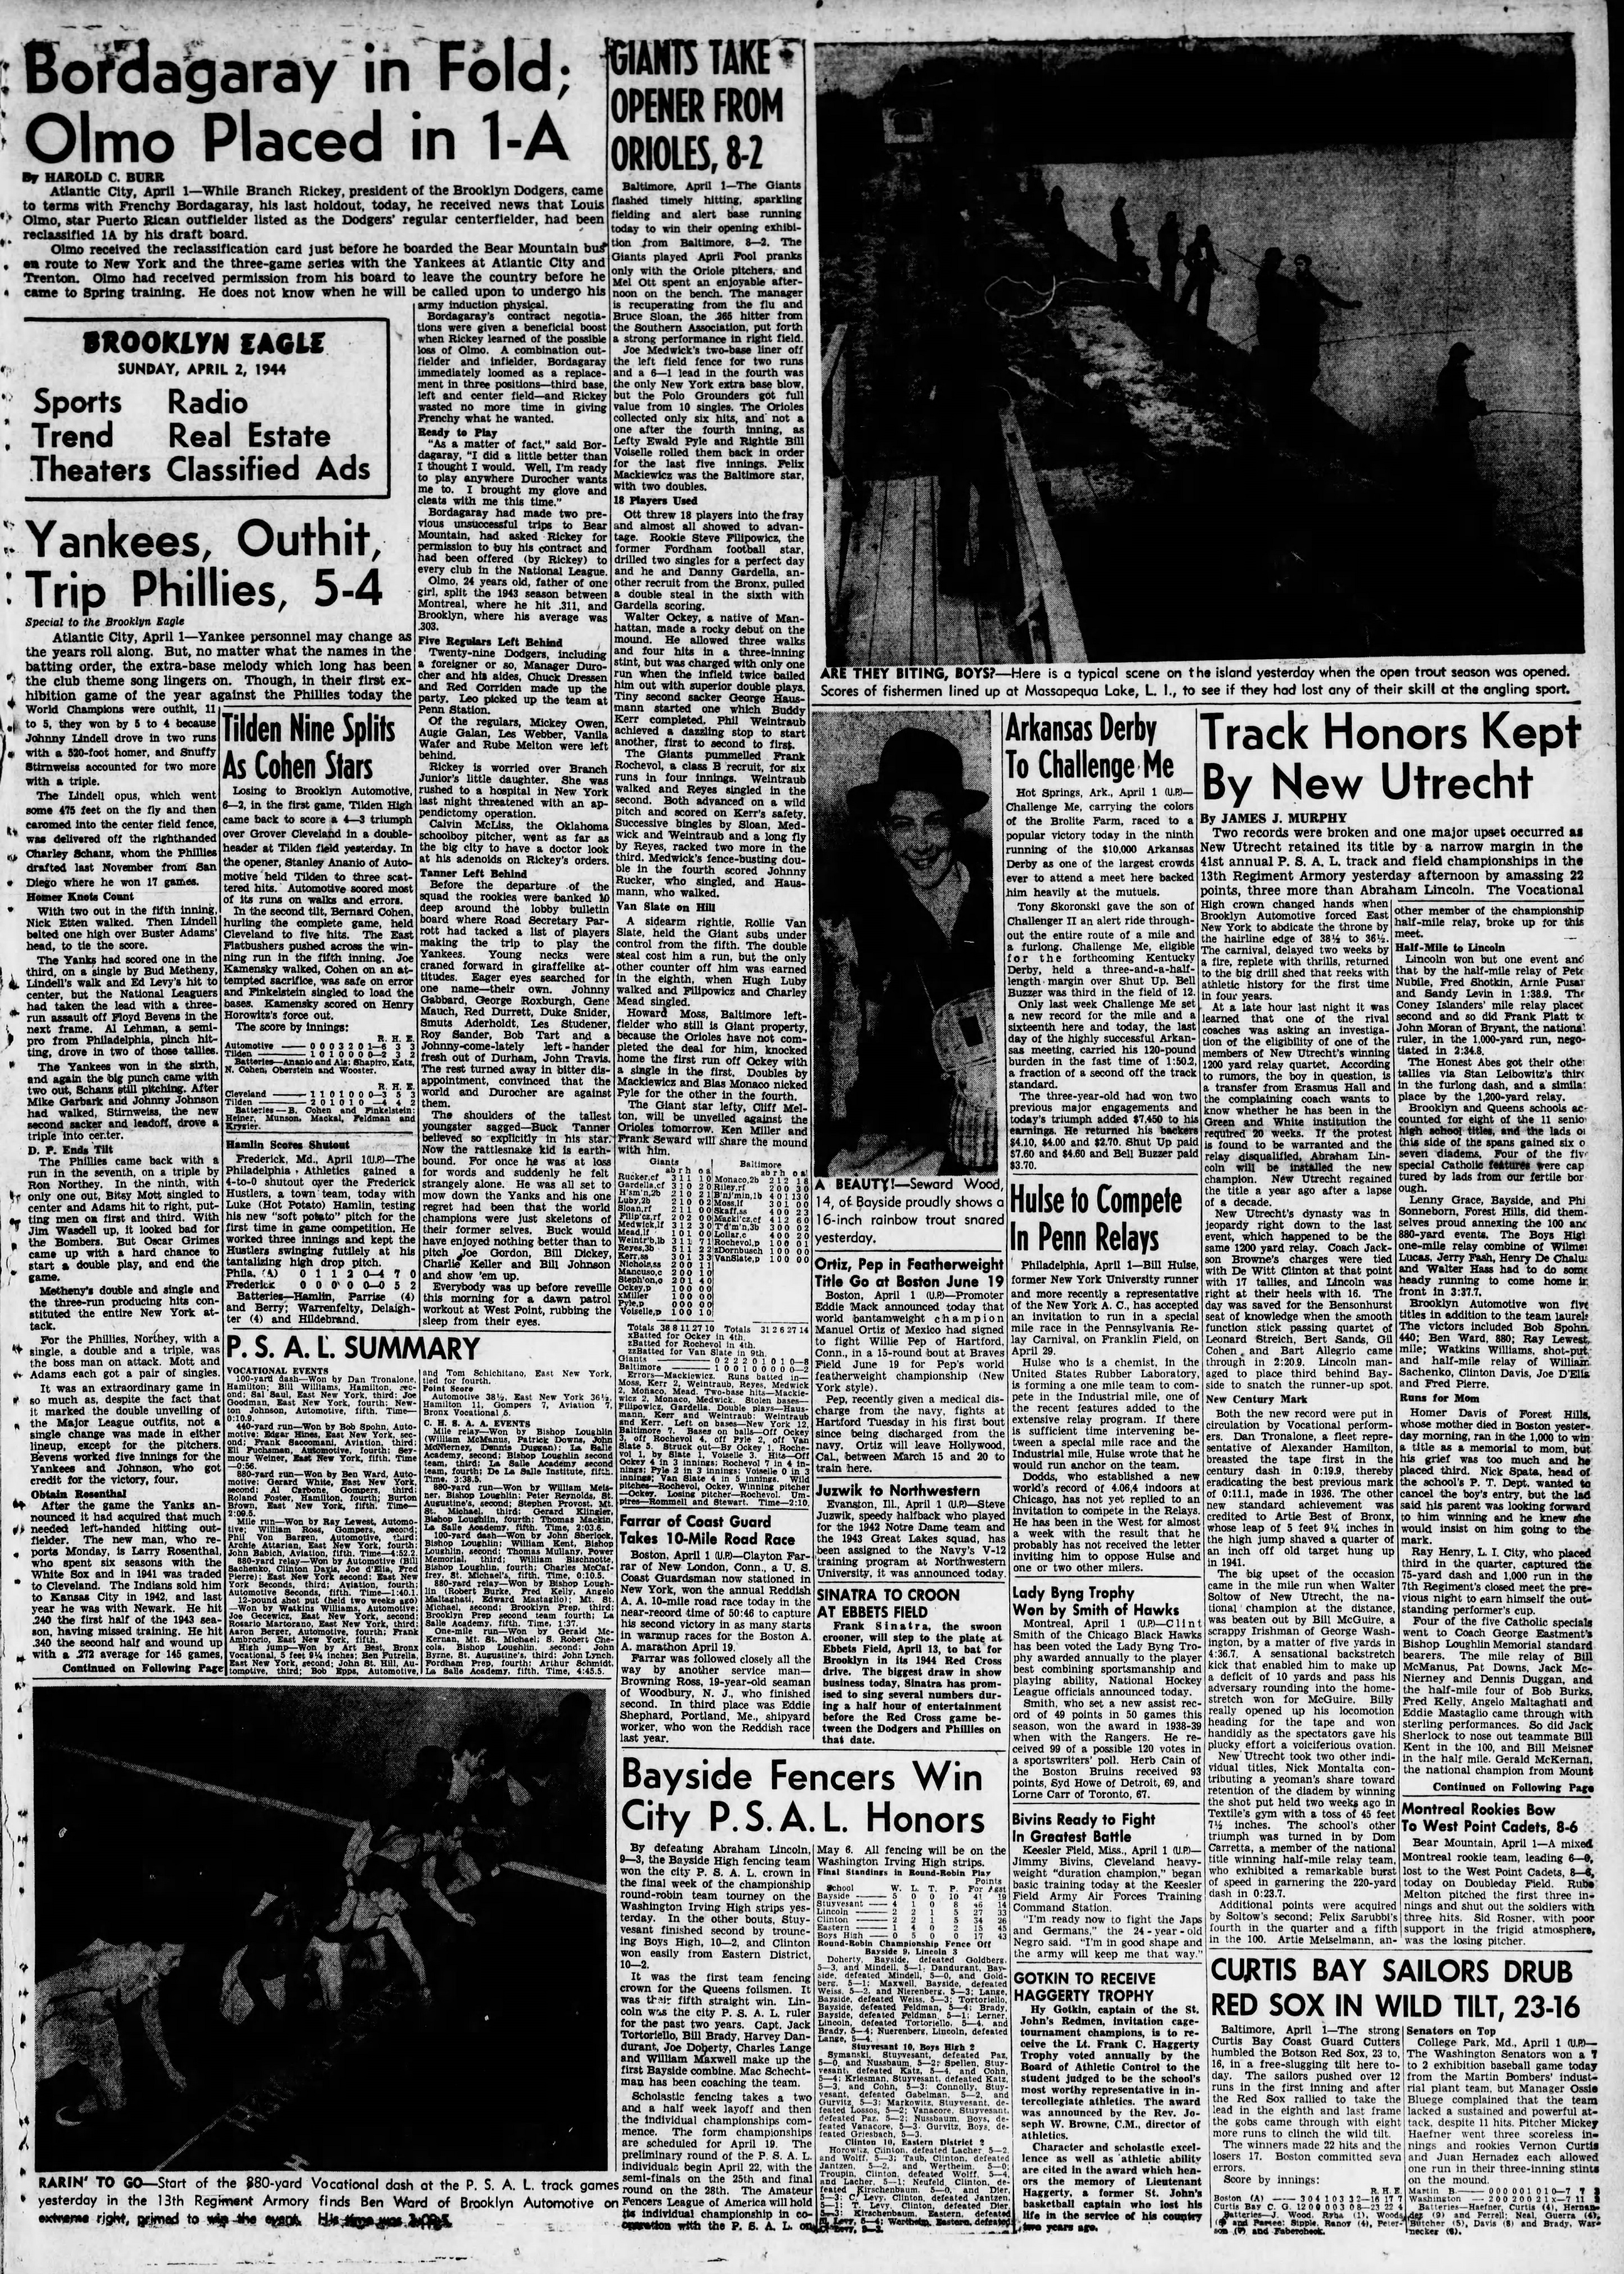 The_Brooklyn_Daily_Eagle_Sun__Apr_2__1944_(2).jpg